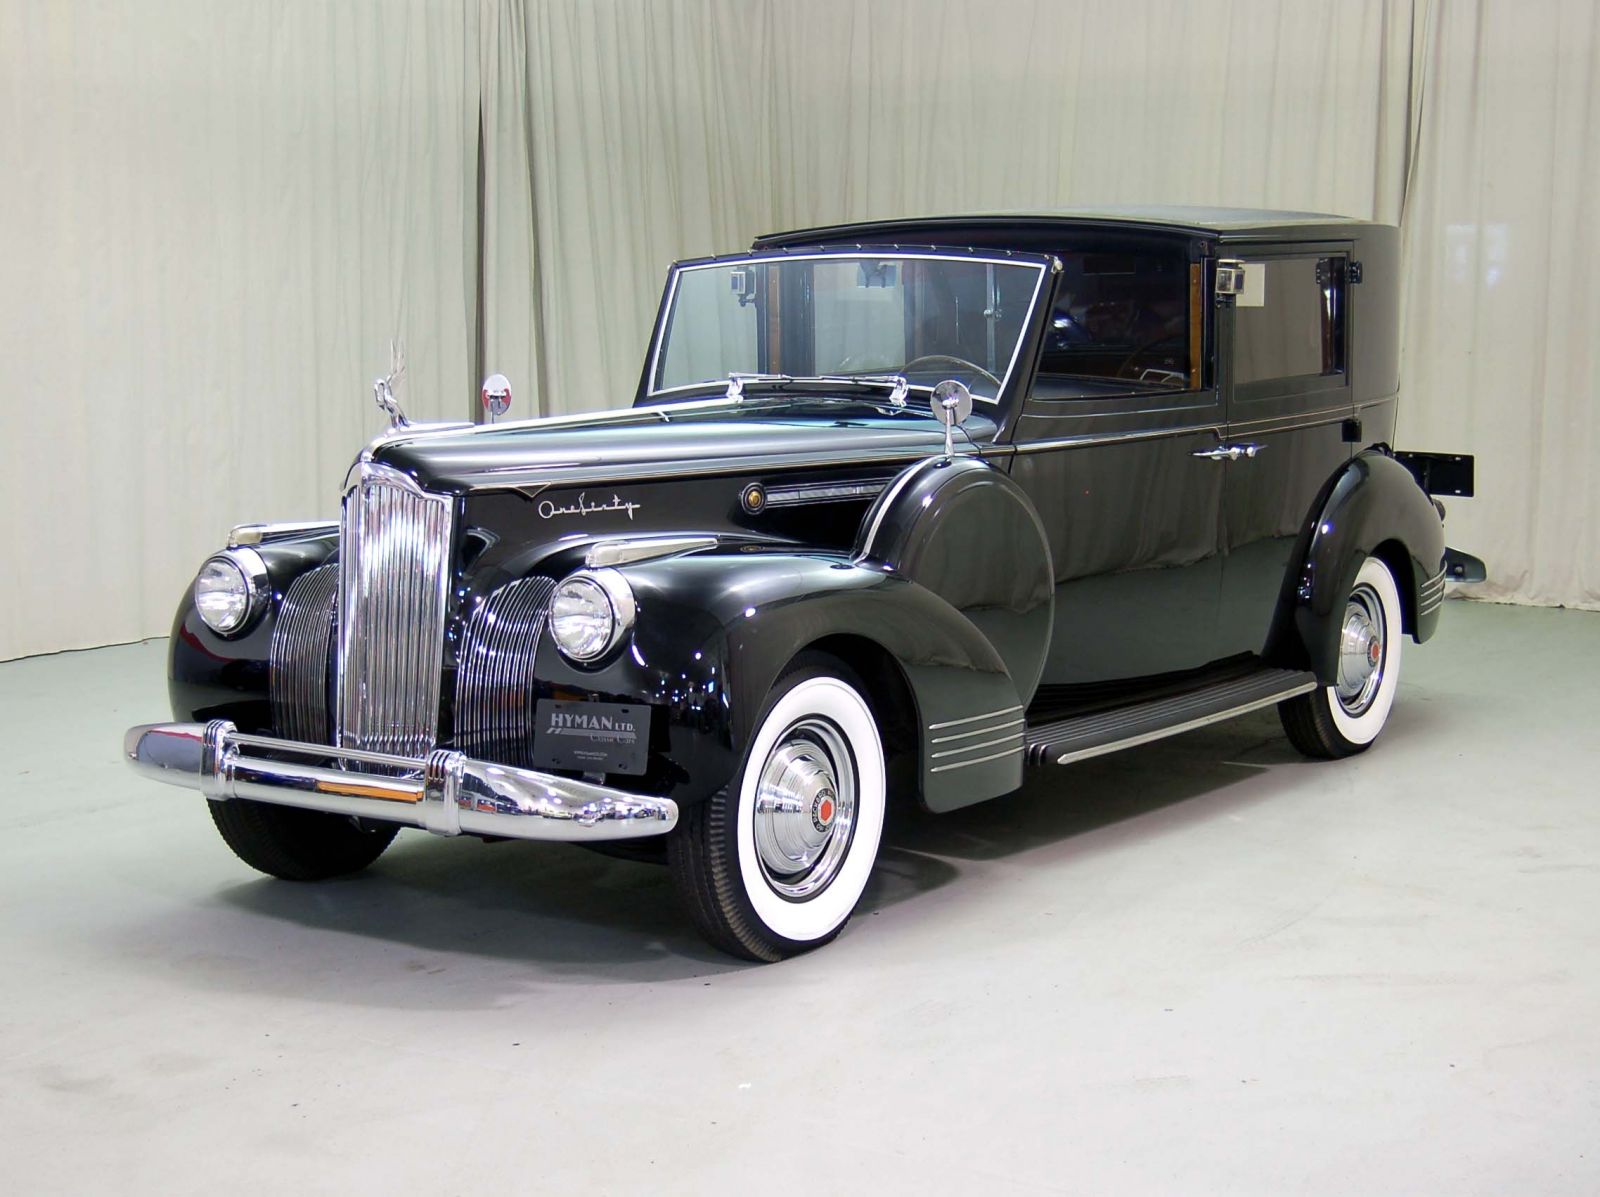 1941 Packard Limousine Classic Car For Sale | Buy 1941 Packard Limousine at Hyman LTD